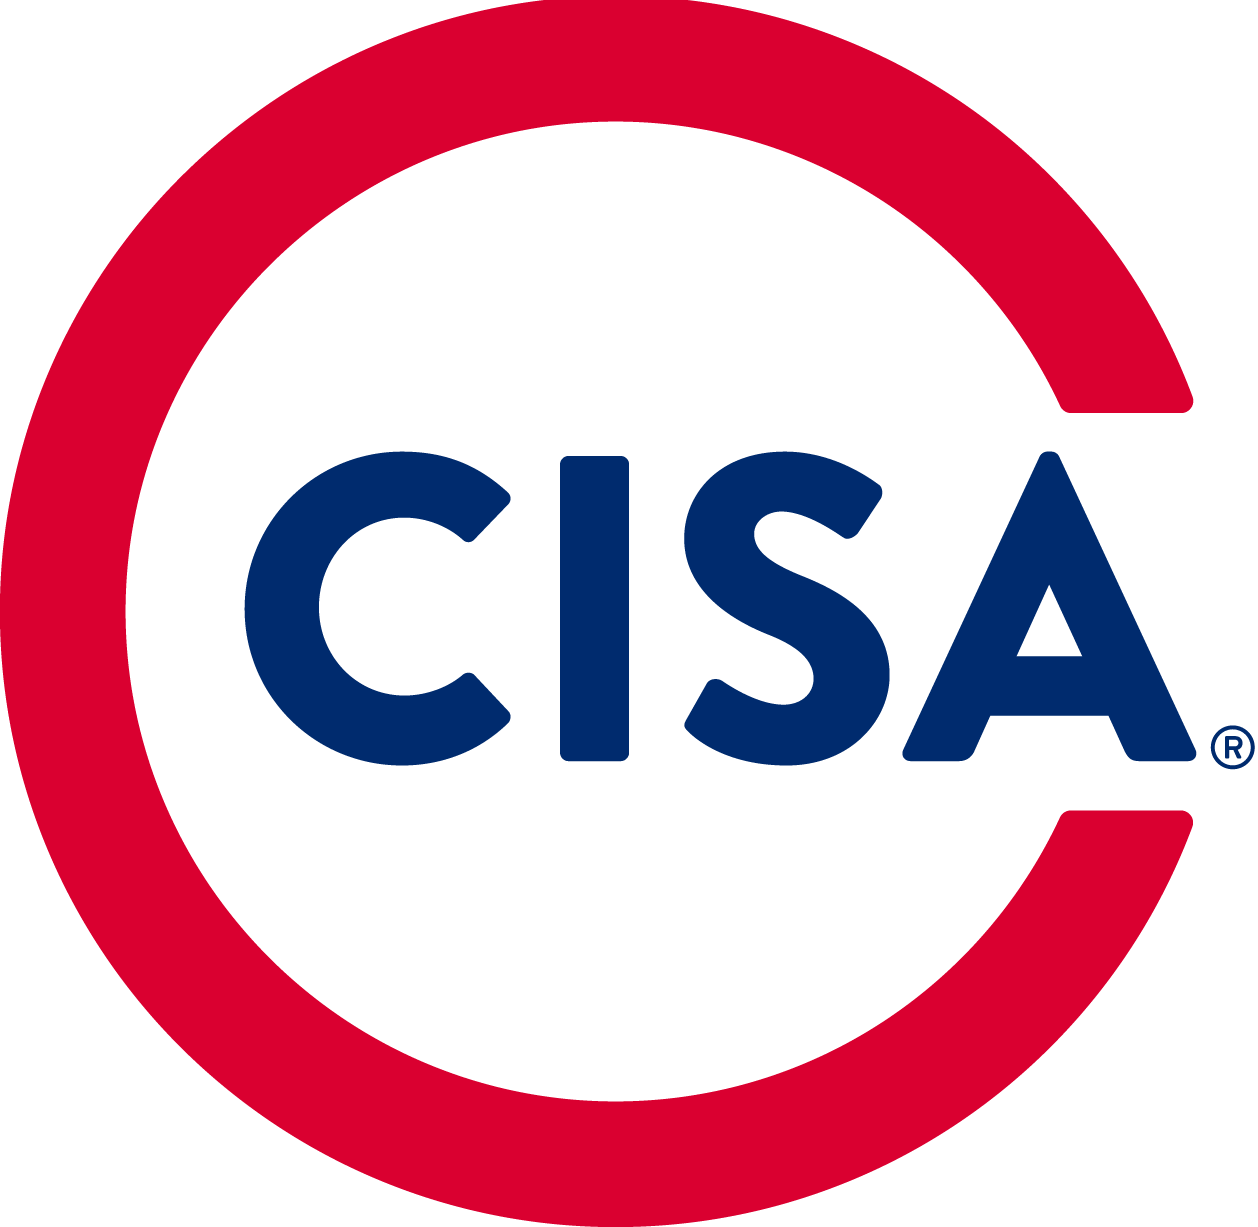 CISA badge